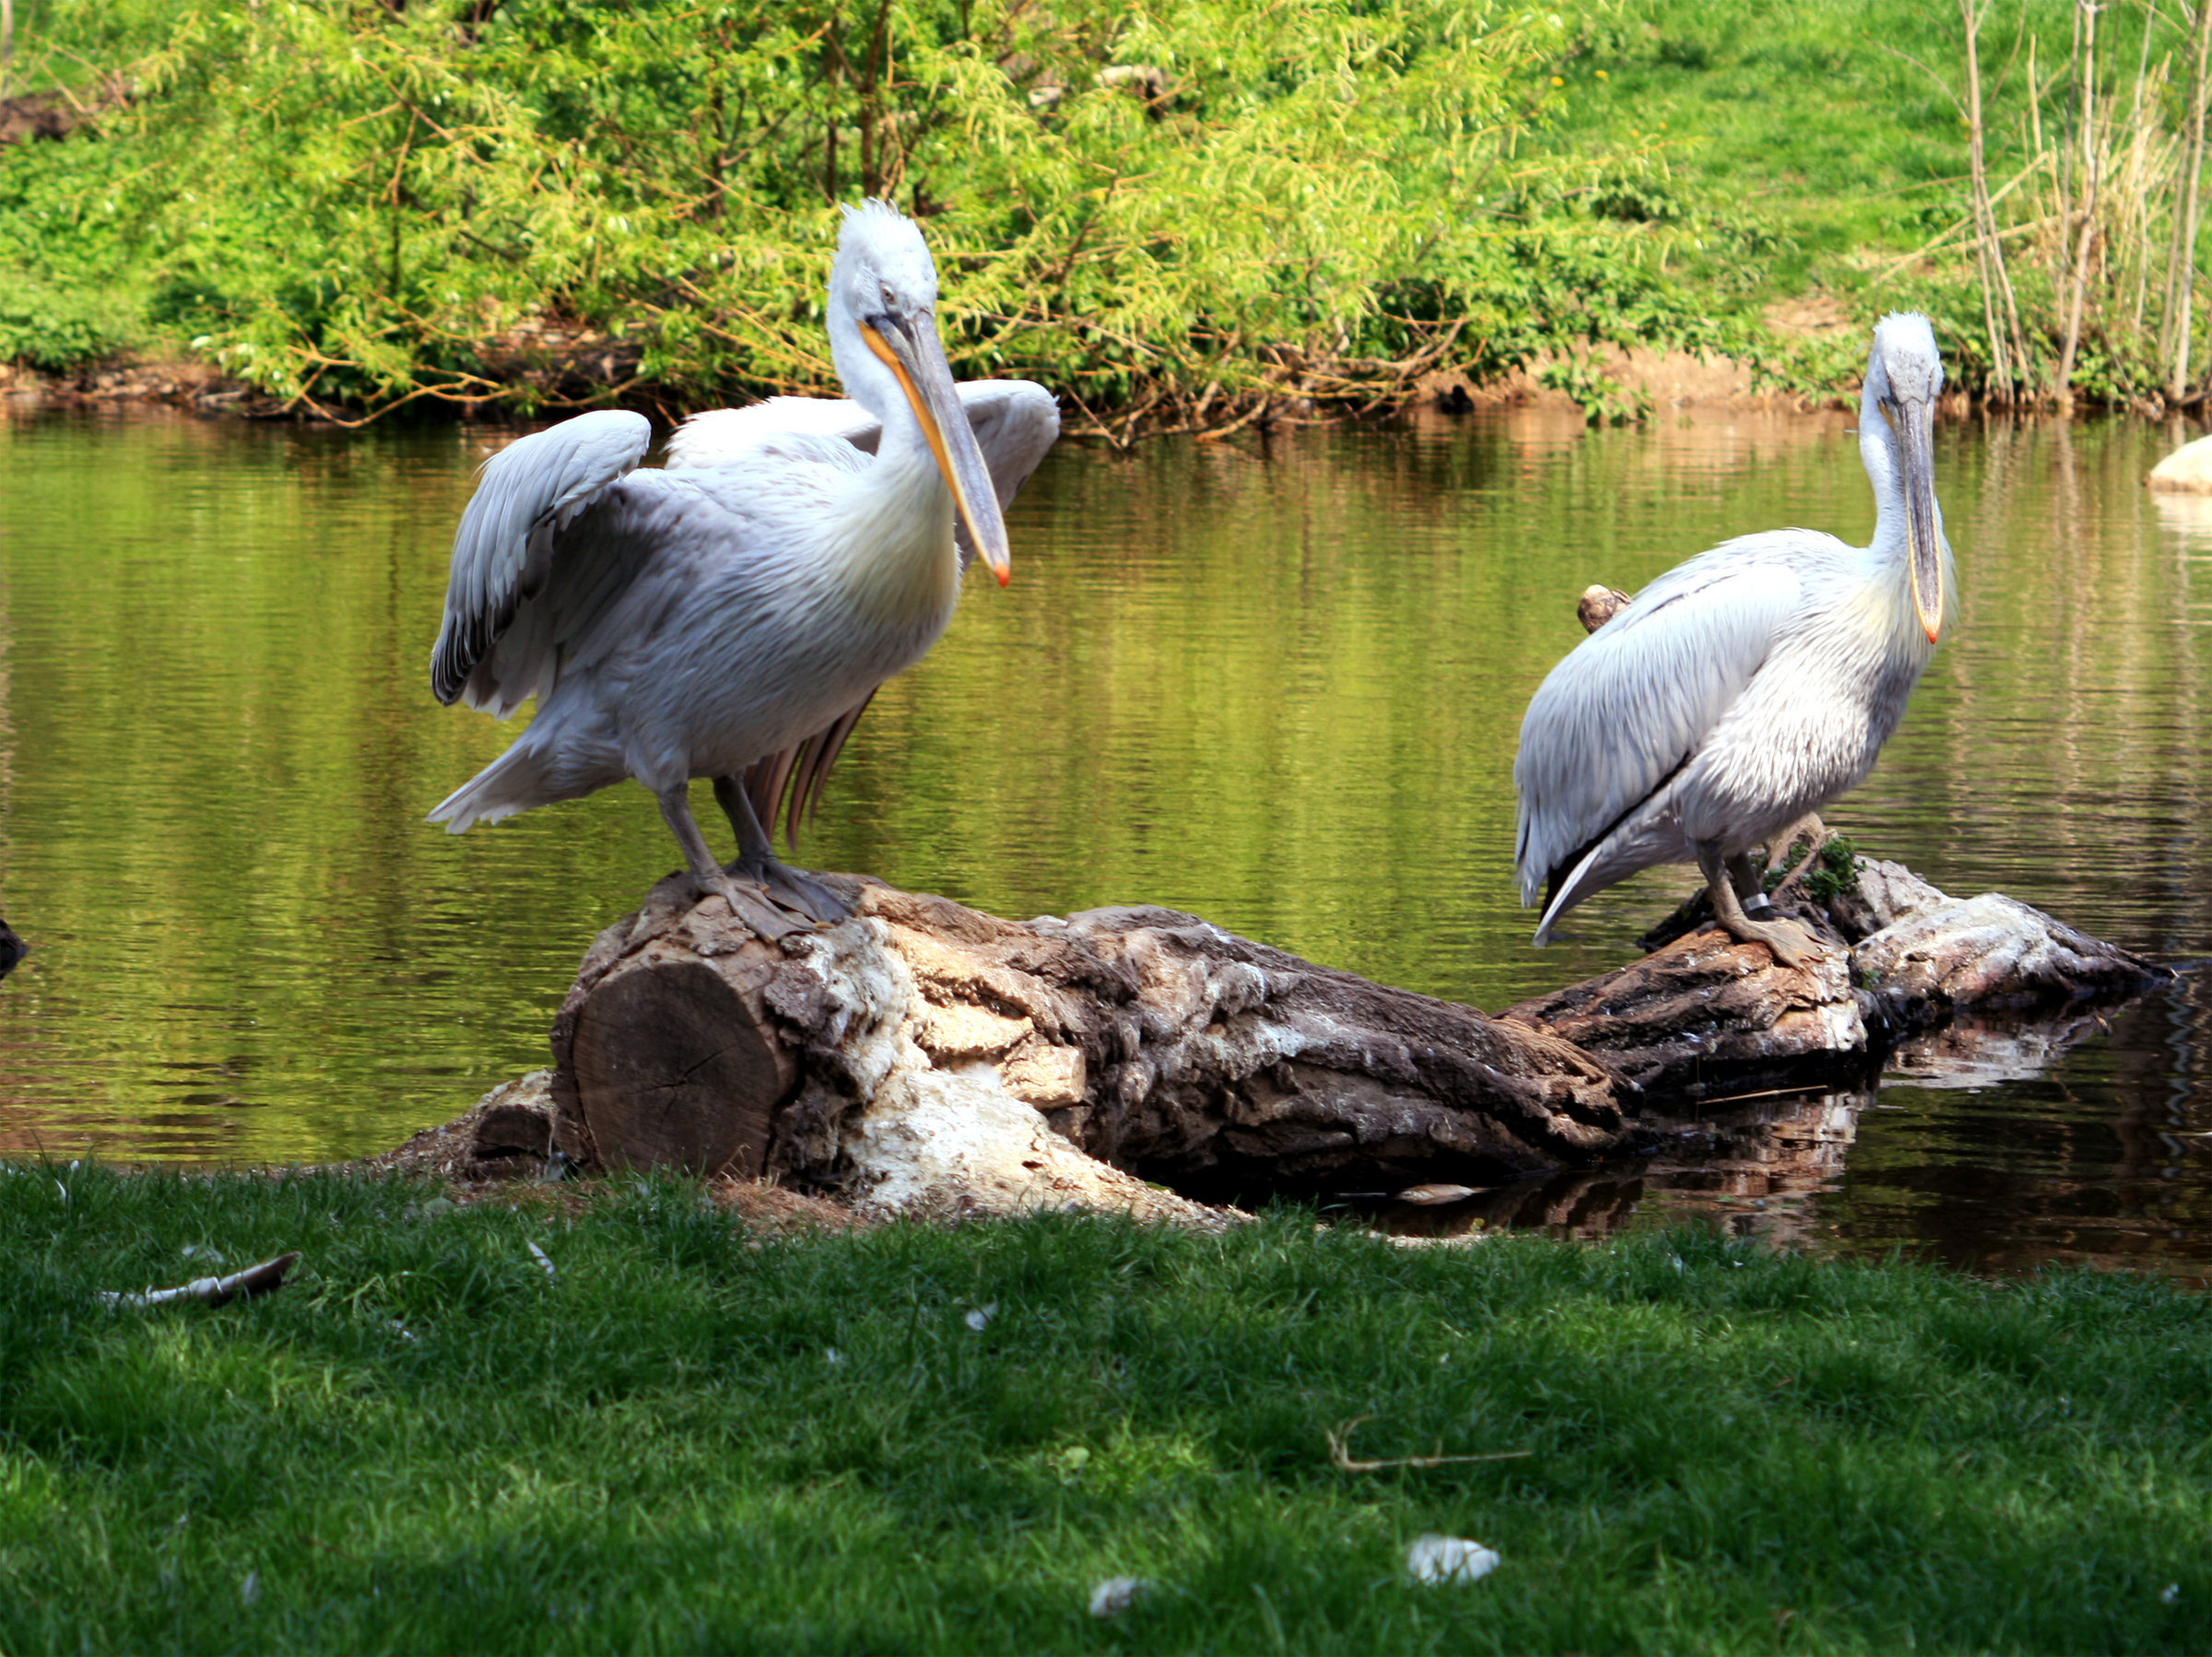 294715 Bild herunterladen tiere, pelikan, vögel - Hintergrundbilder und Bildschirmschoner kostenlos